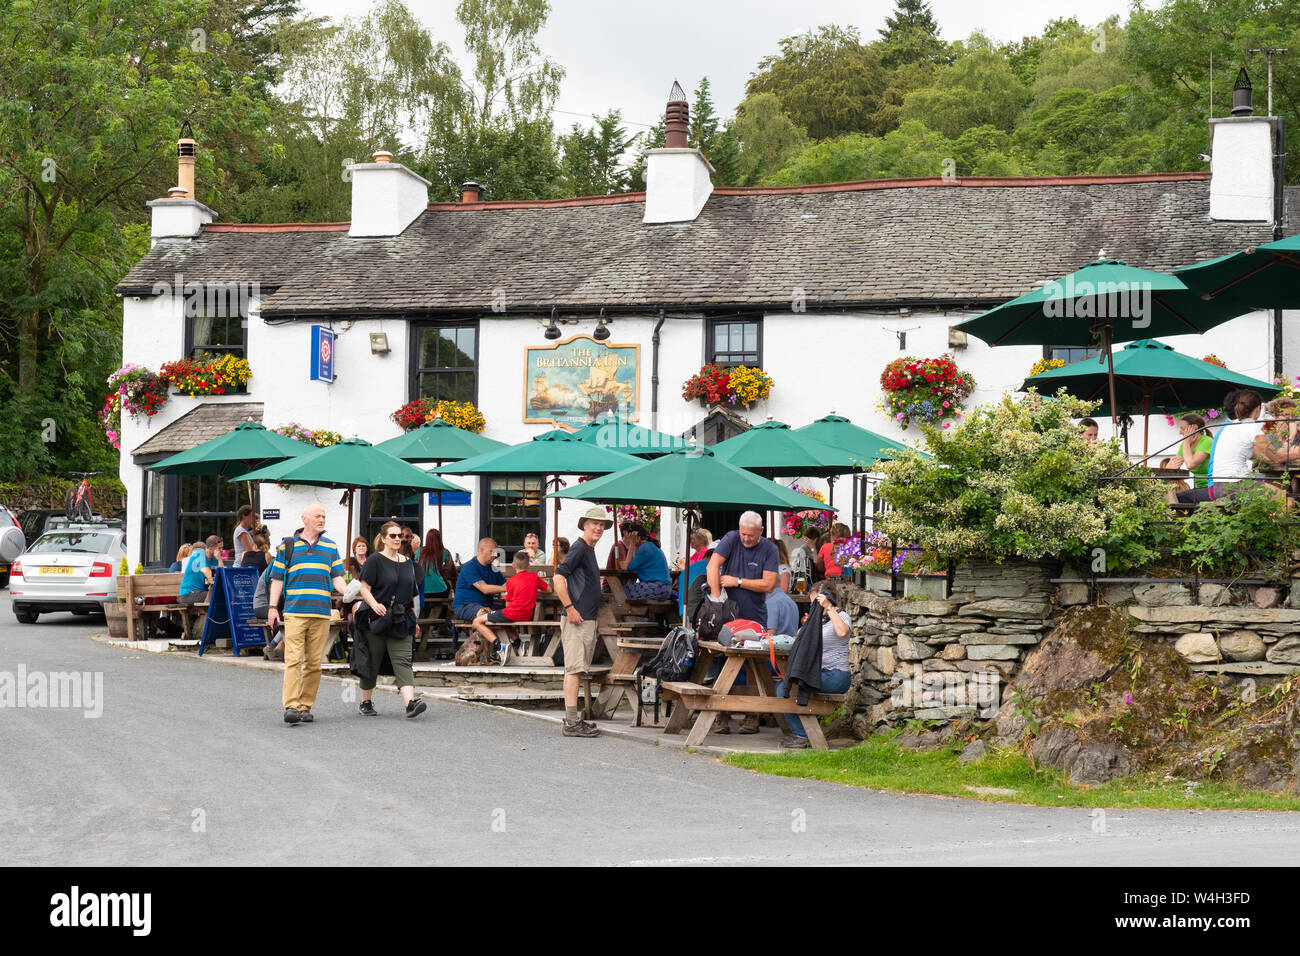 Britannia Inn pub, Lake Road, Lake District, Cumbria, England, UK Banque D'Images